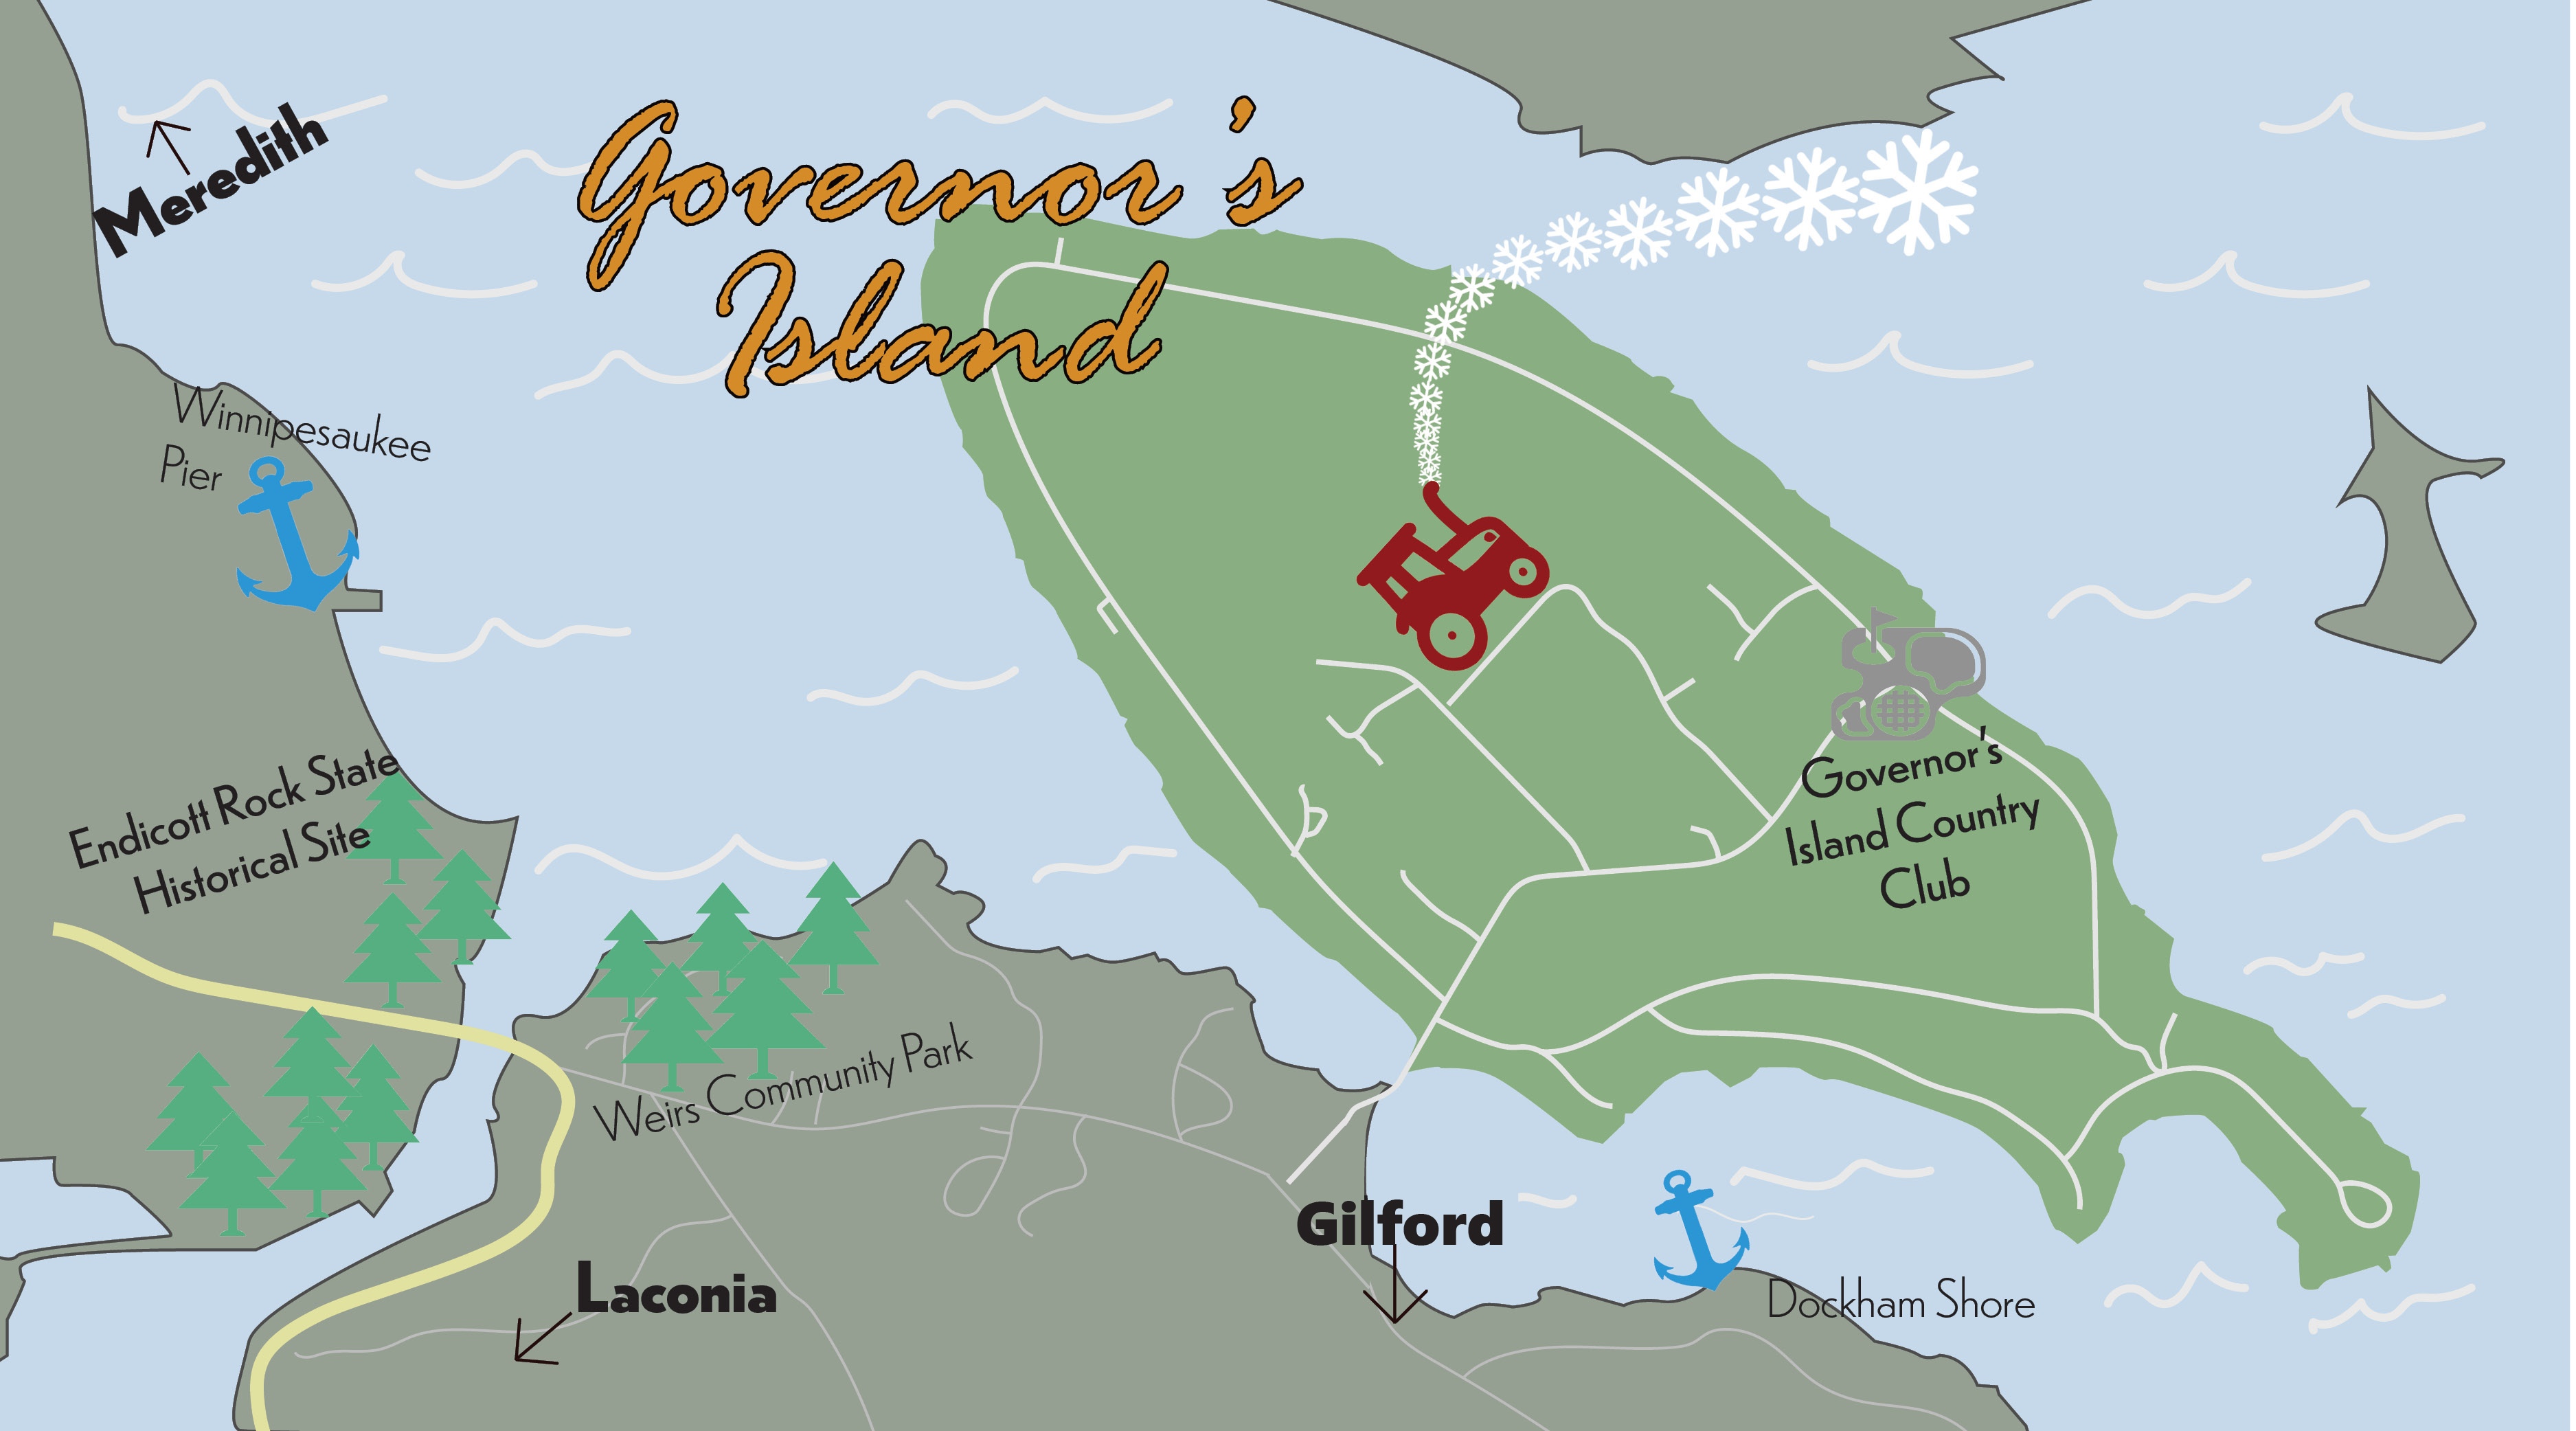 gov-island-final-service-area